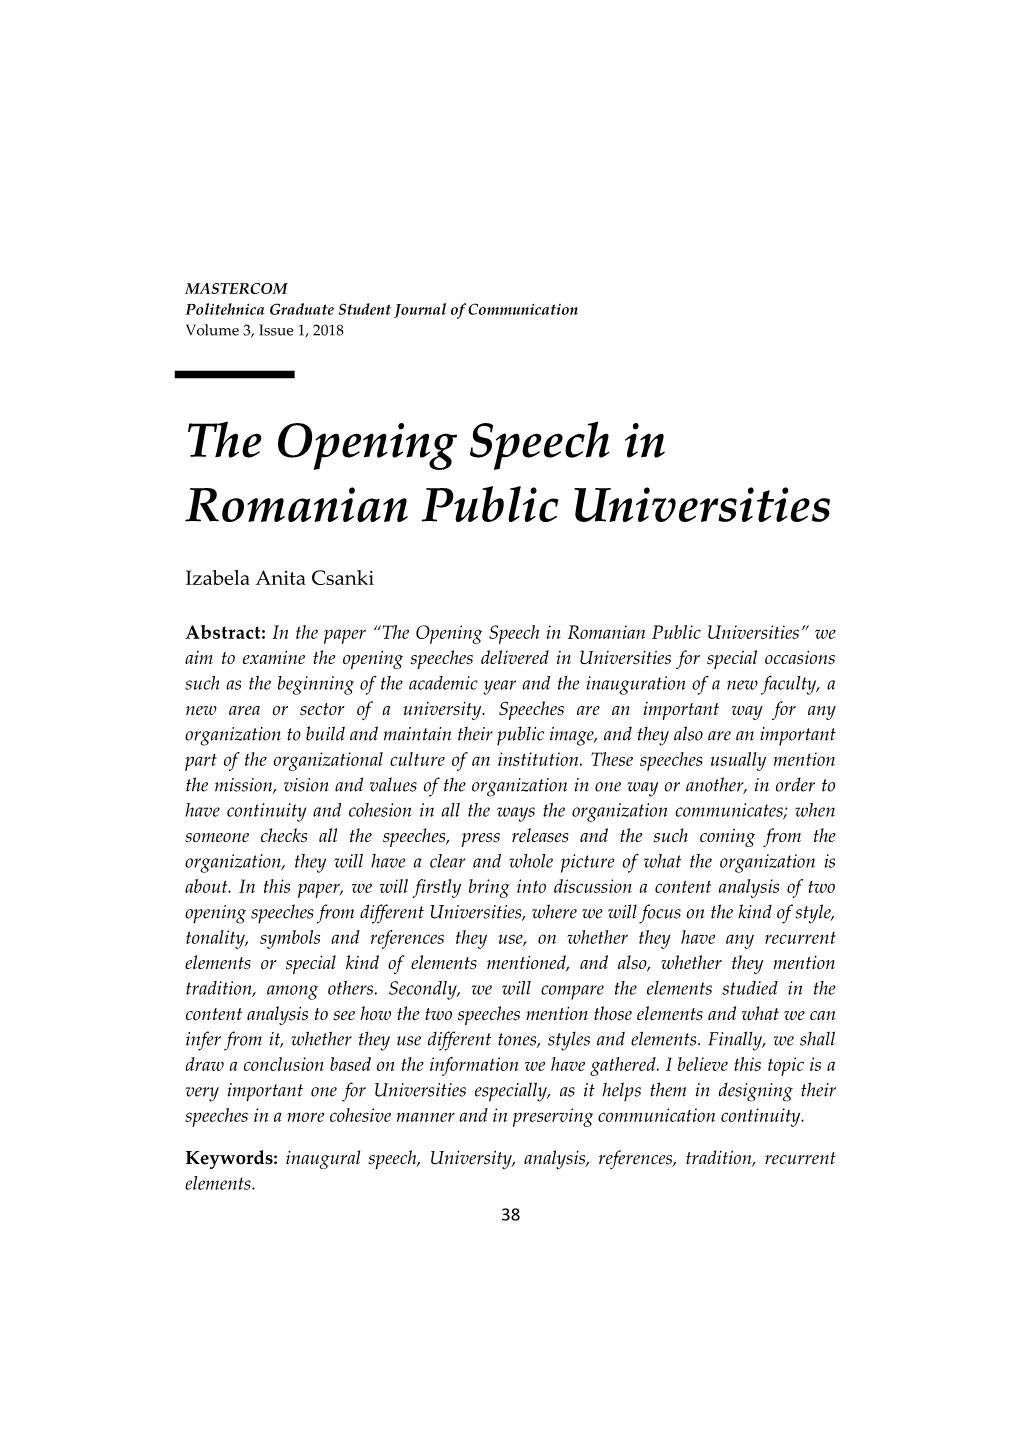 The Opening Speech in Romanian Public Universities